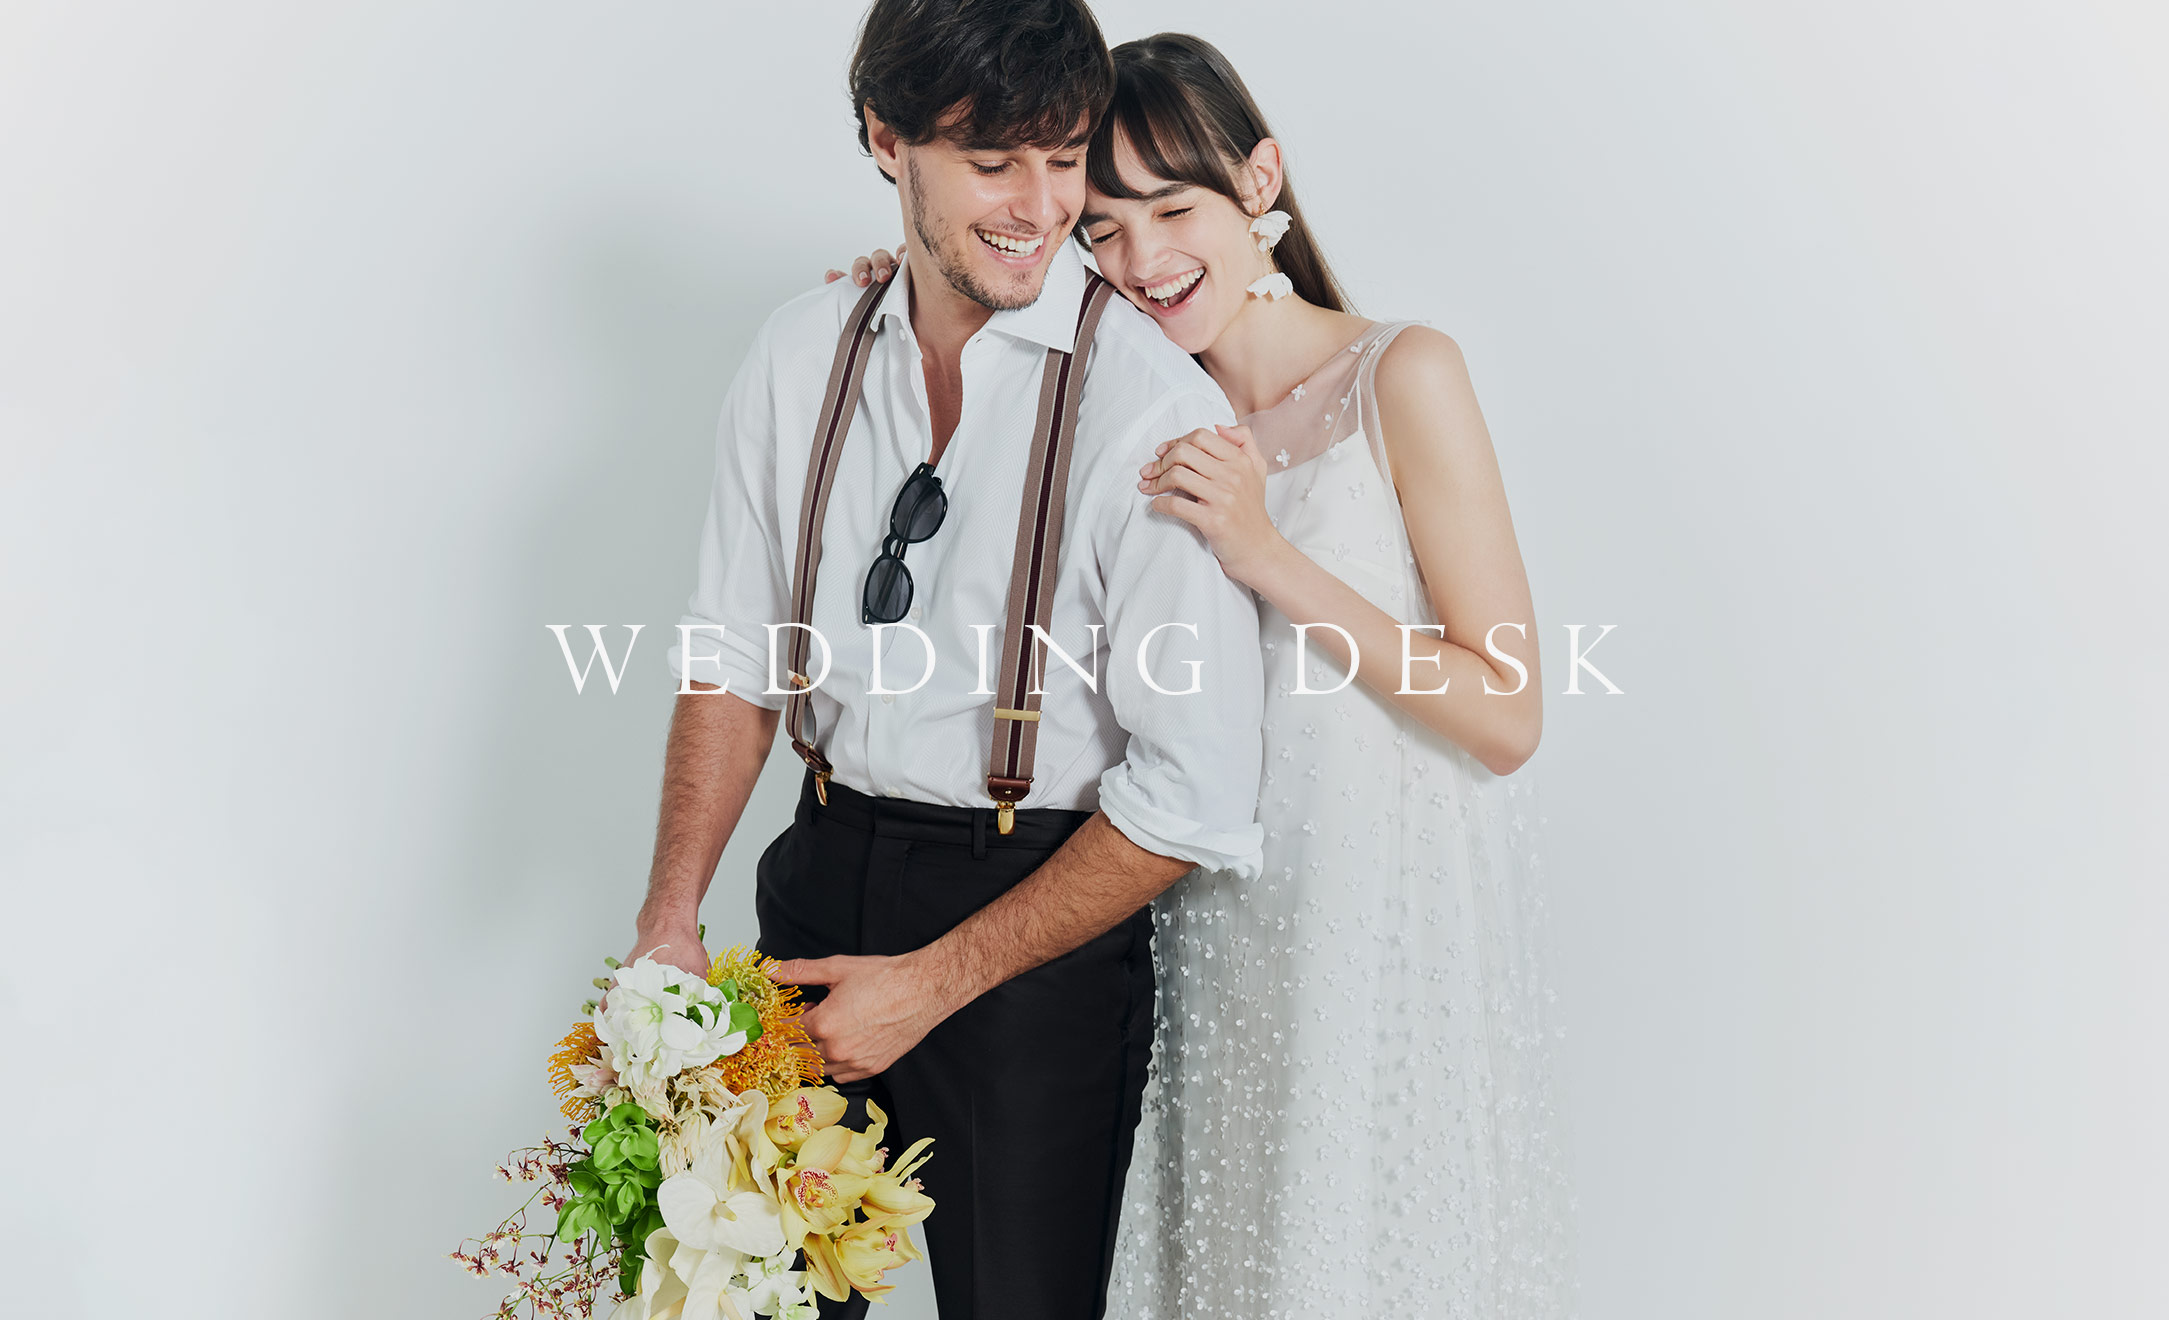 TAKAMI BRIDAL WEDDING DESK パソコン用の画像